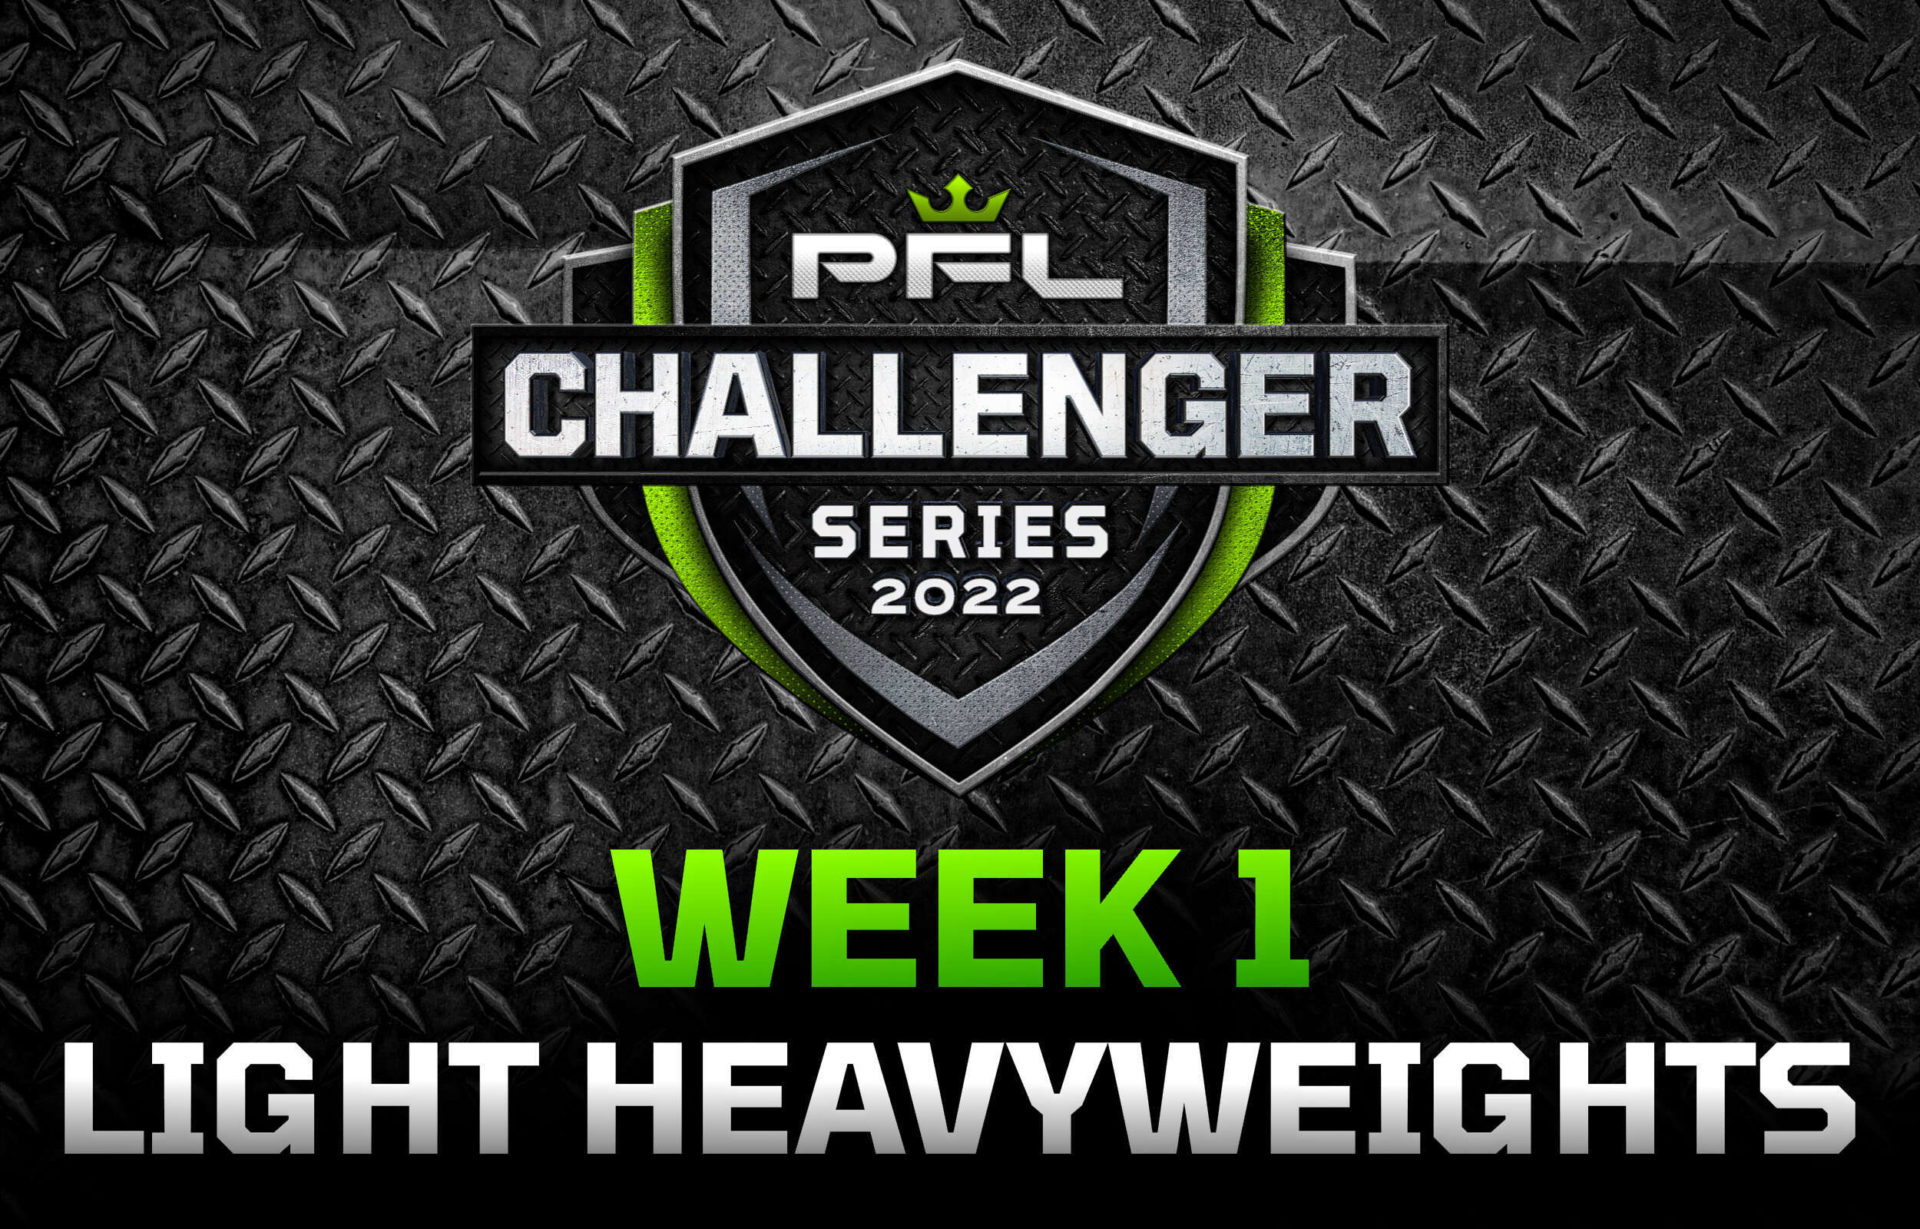 PFL Challenger Series 2022 - Week 1